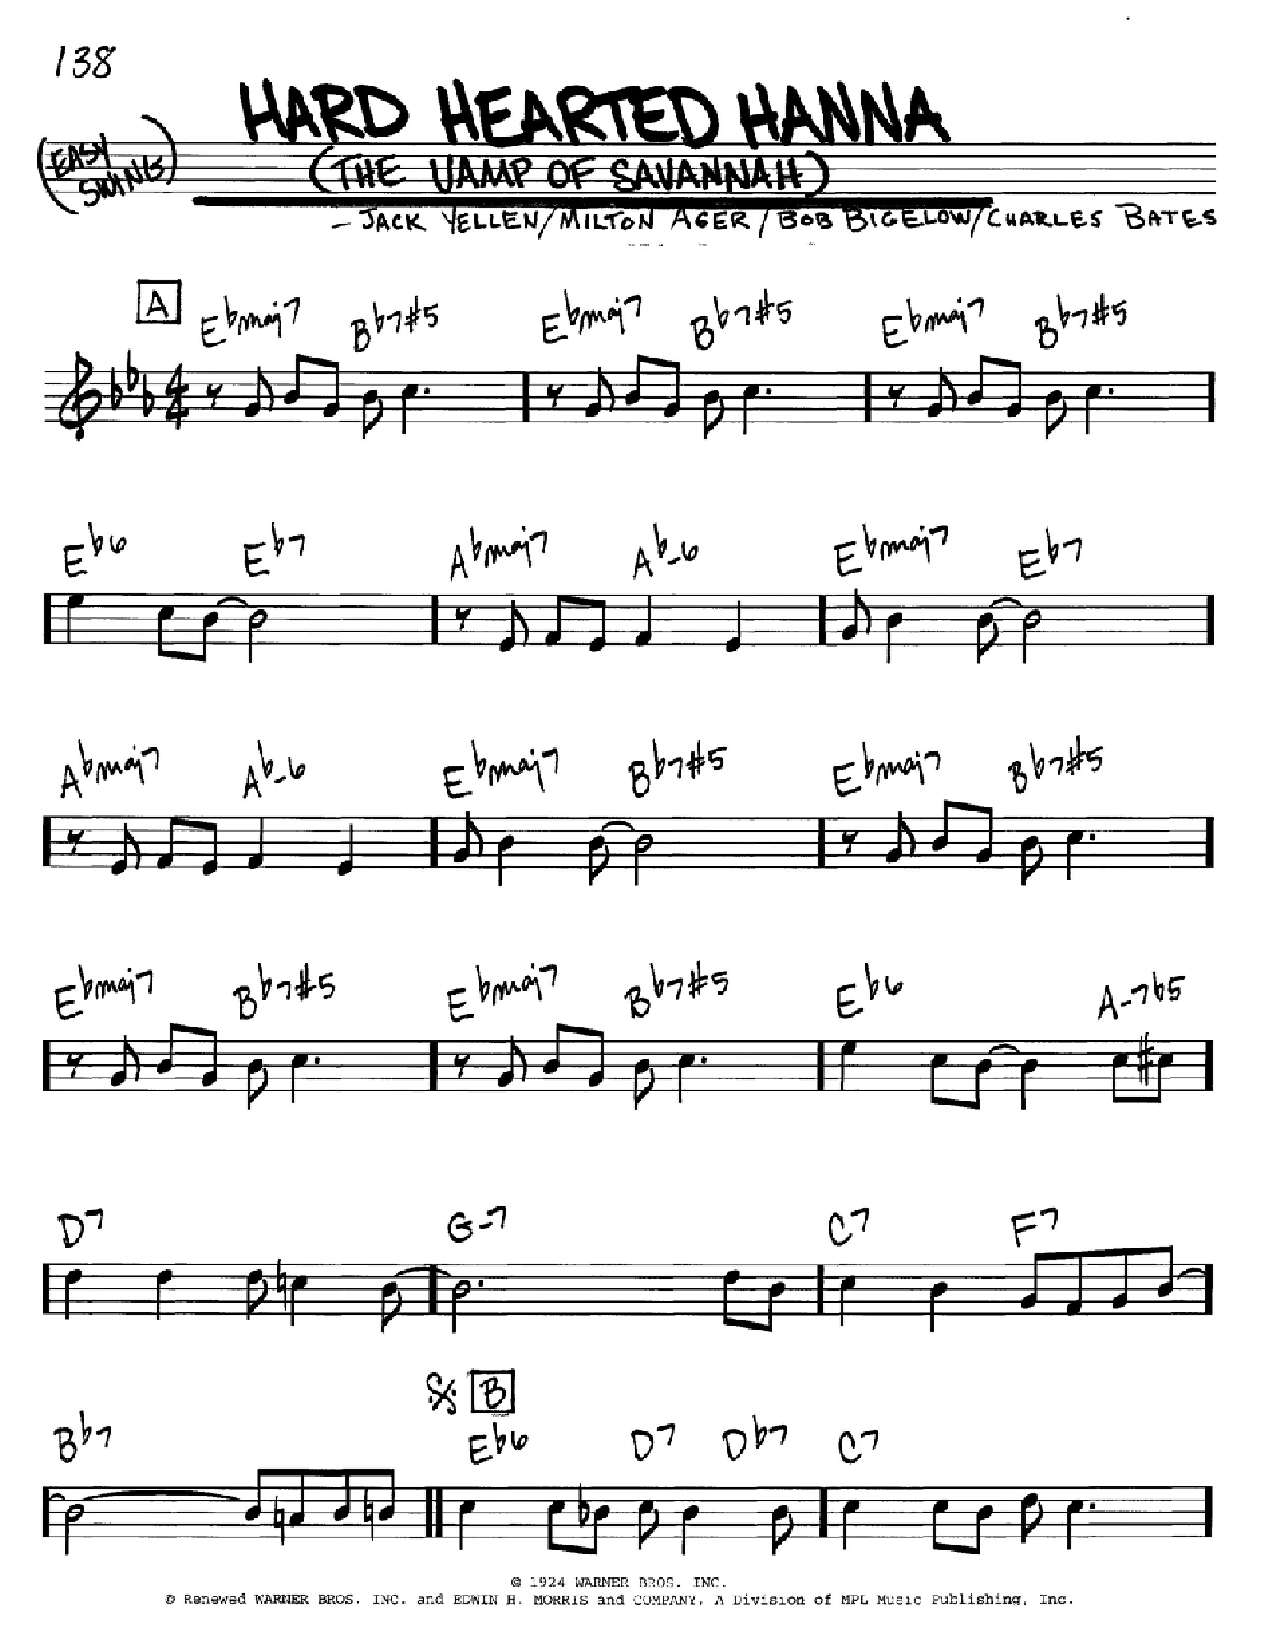 Jack Yellen Hard Hearted Hannah (The Vamp Of Savannah) Sheet Music Notes & Chords for Real Book – Melody & Chords - Download or Print PDF